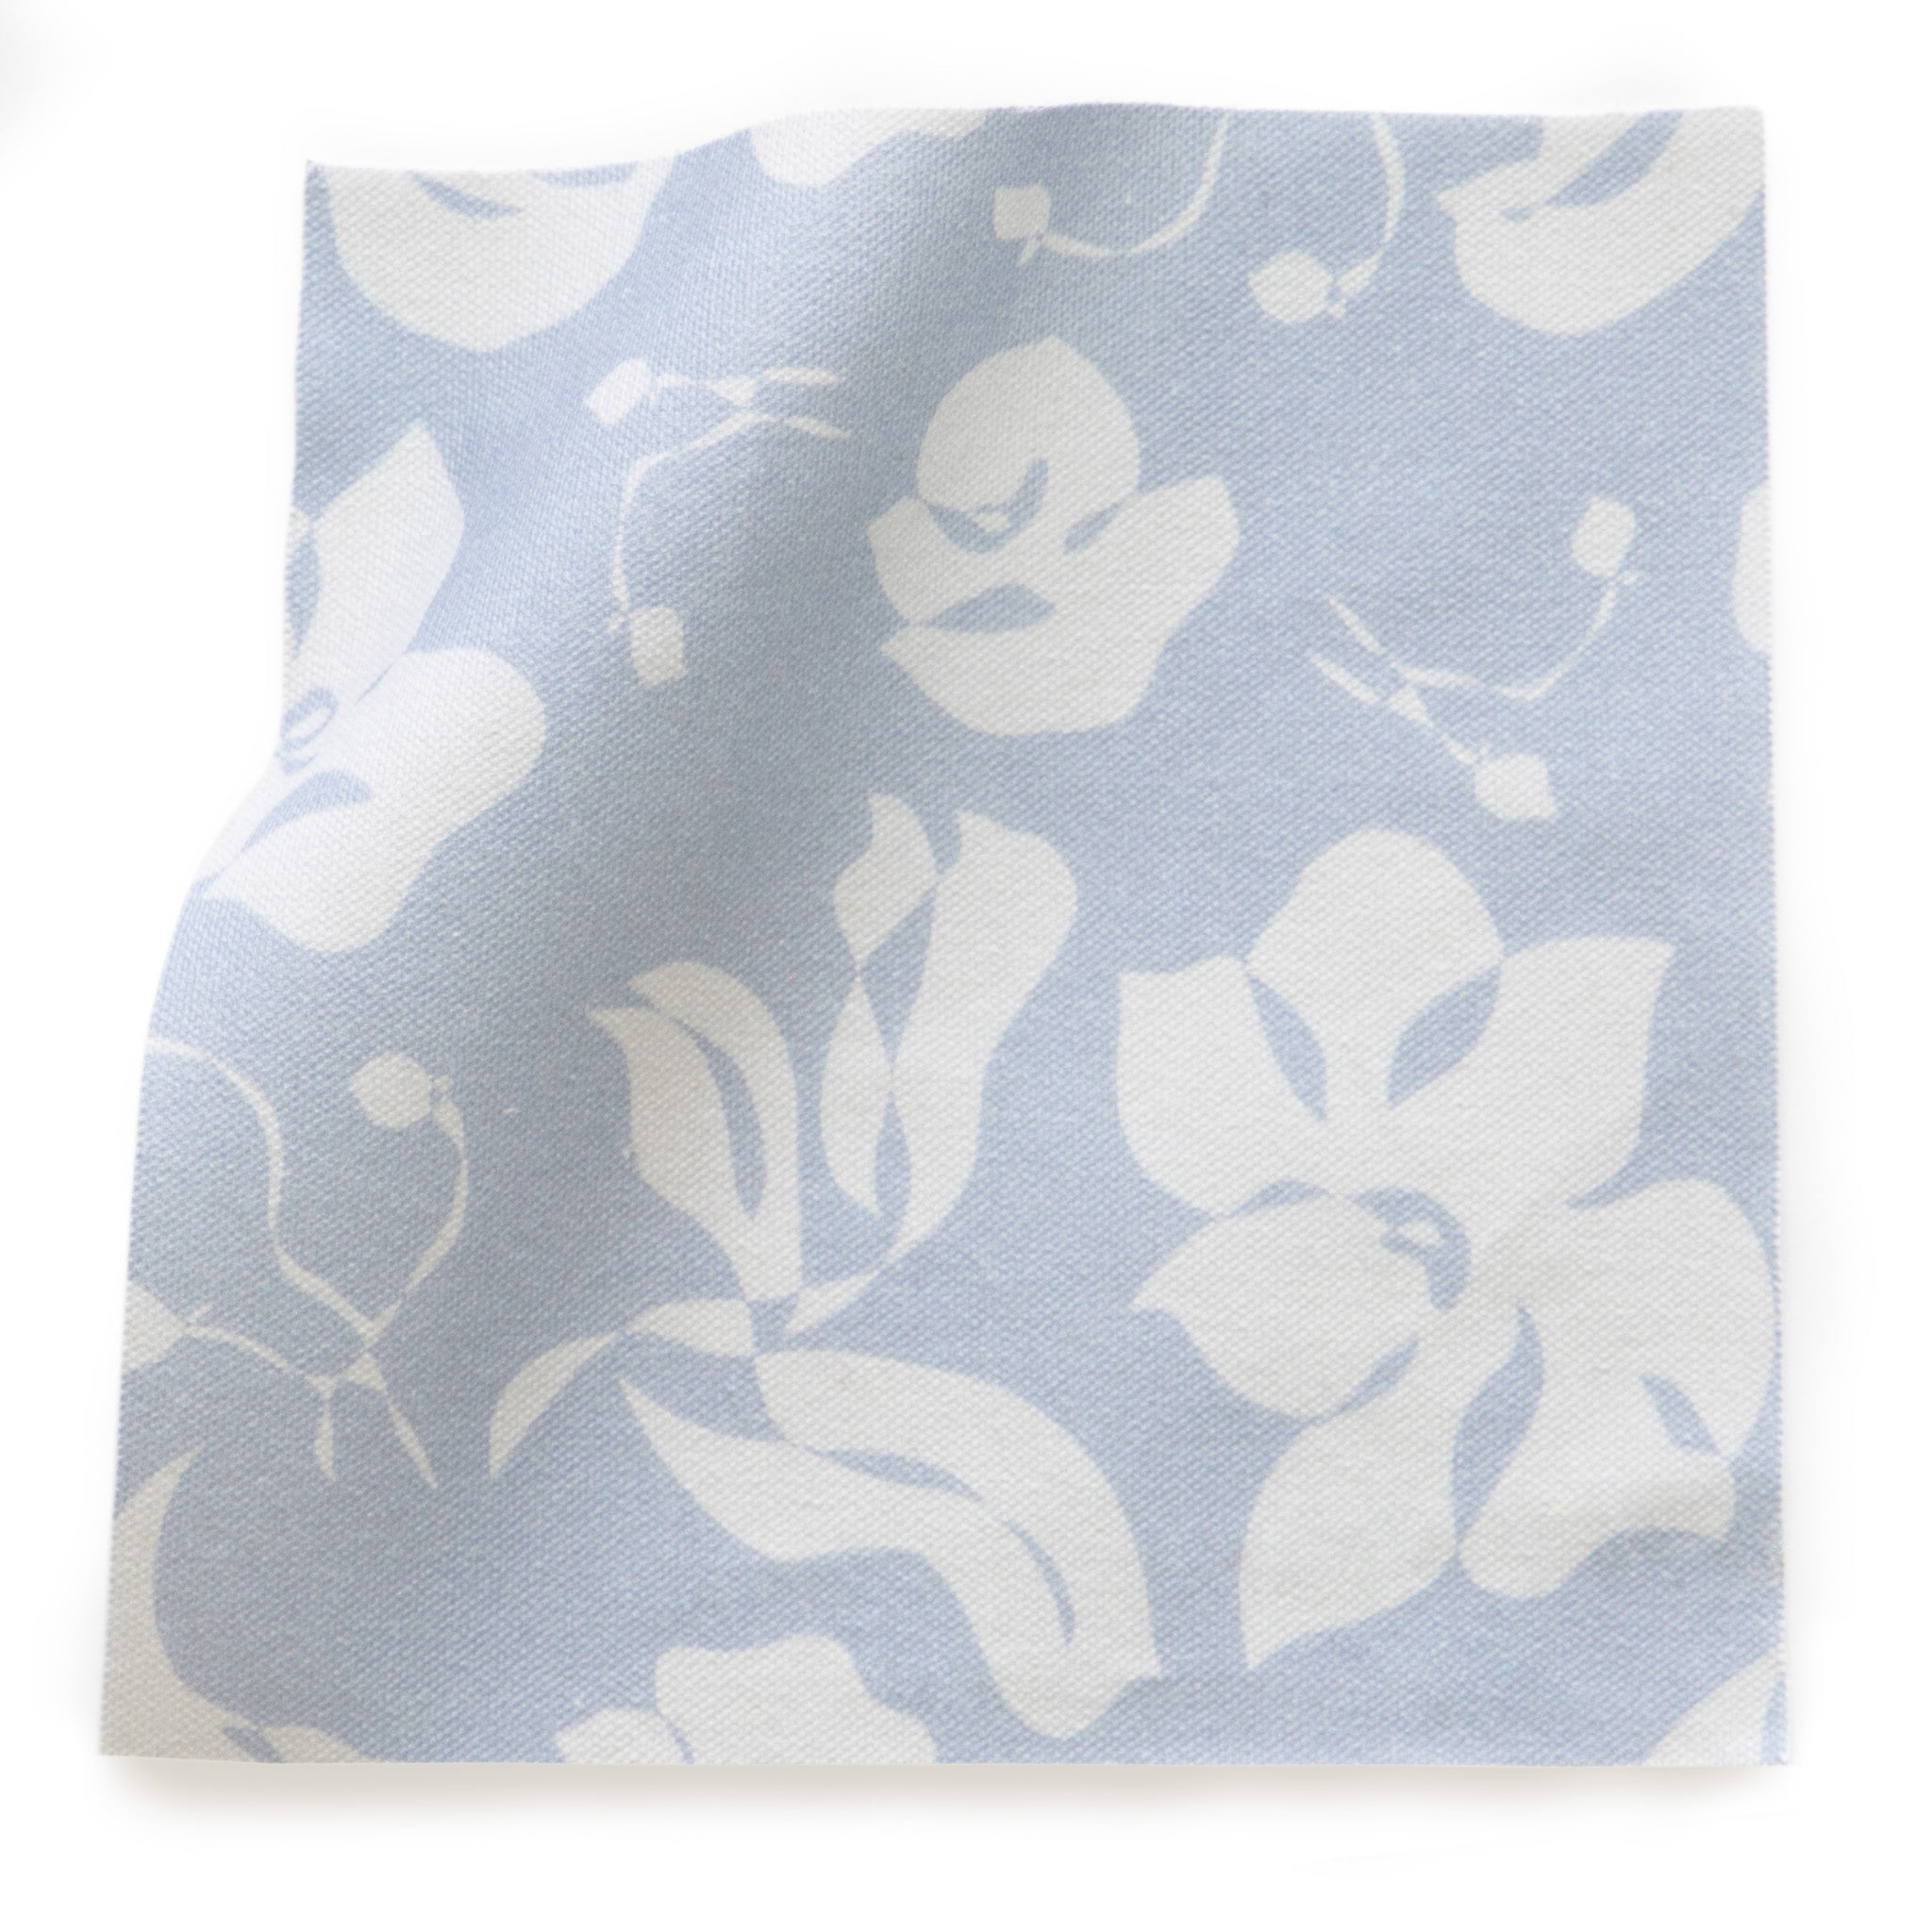 Pearl Cotton Size 8 - 93 Cornflower Blue (variegated) - 077540041527